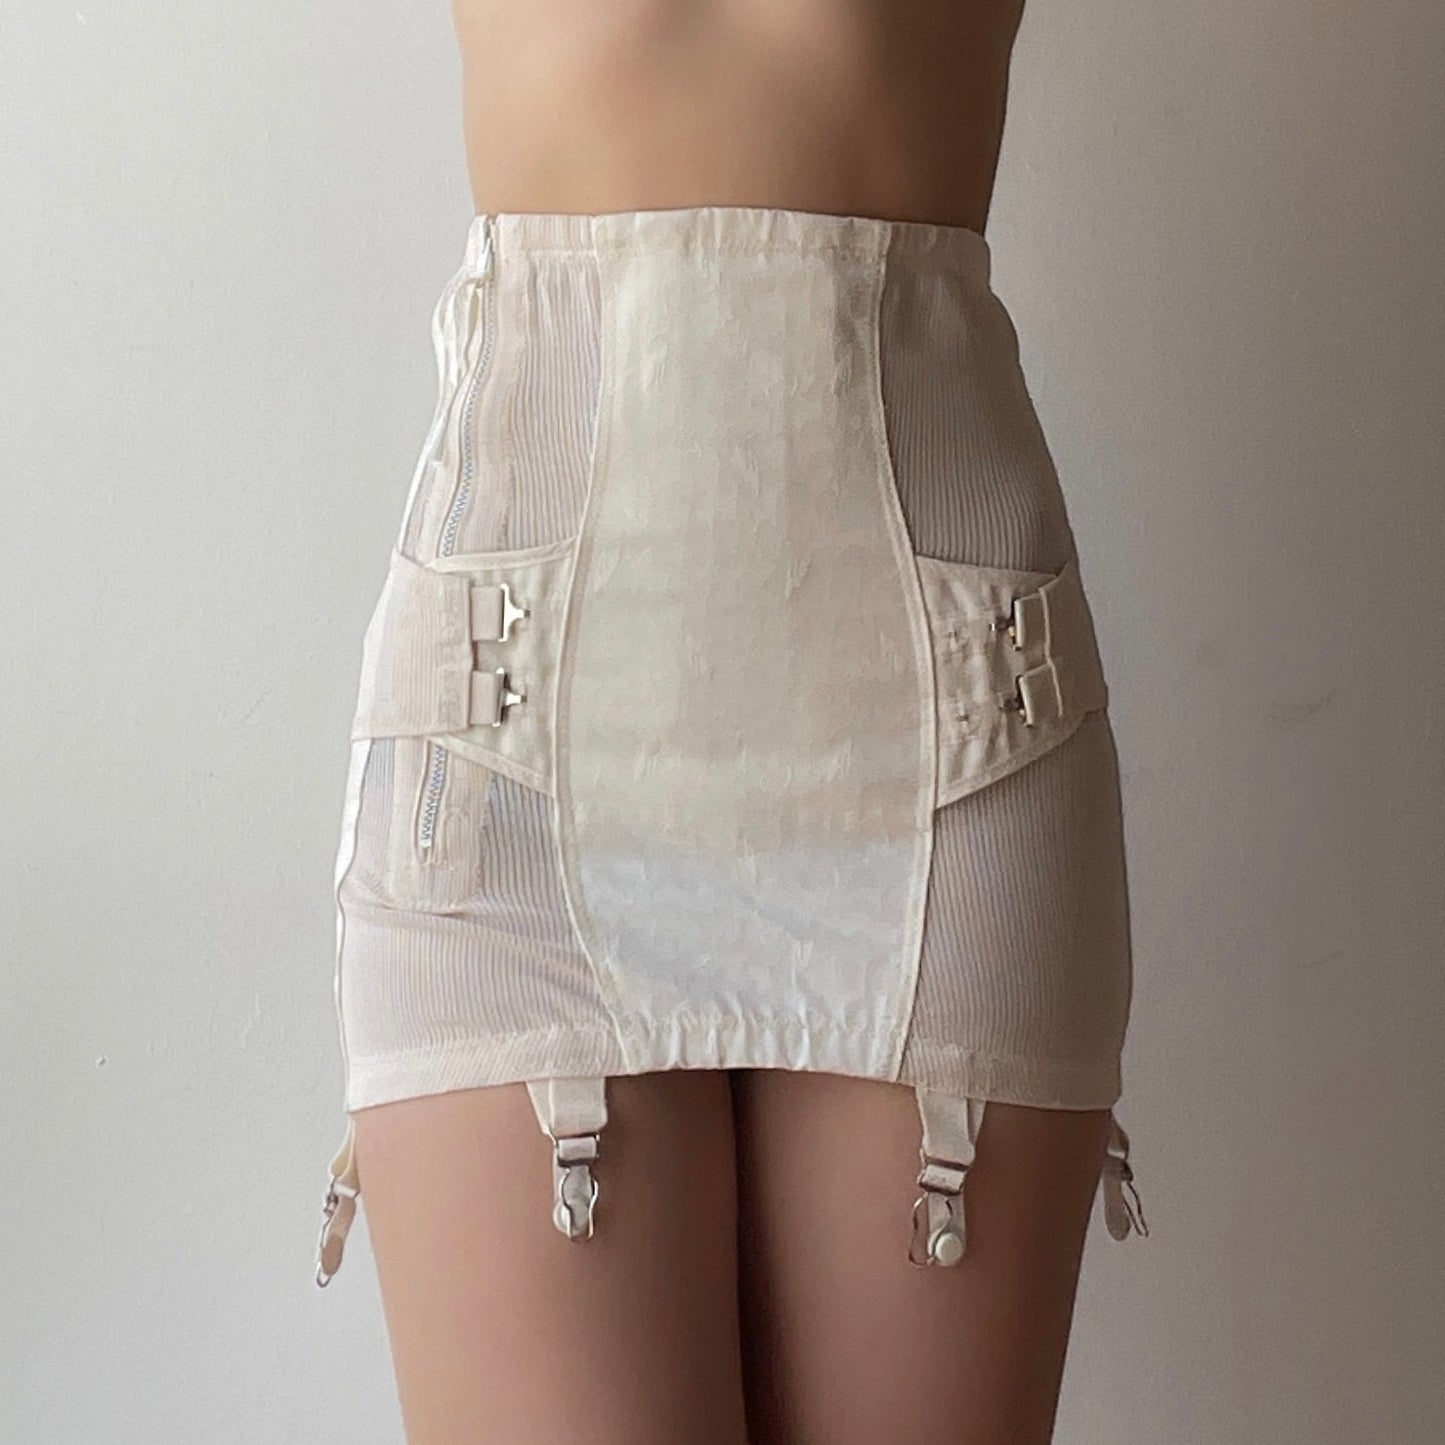 Reworked Vintage Girdle Skirt (M-L)